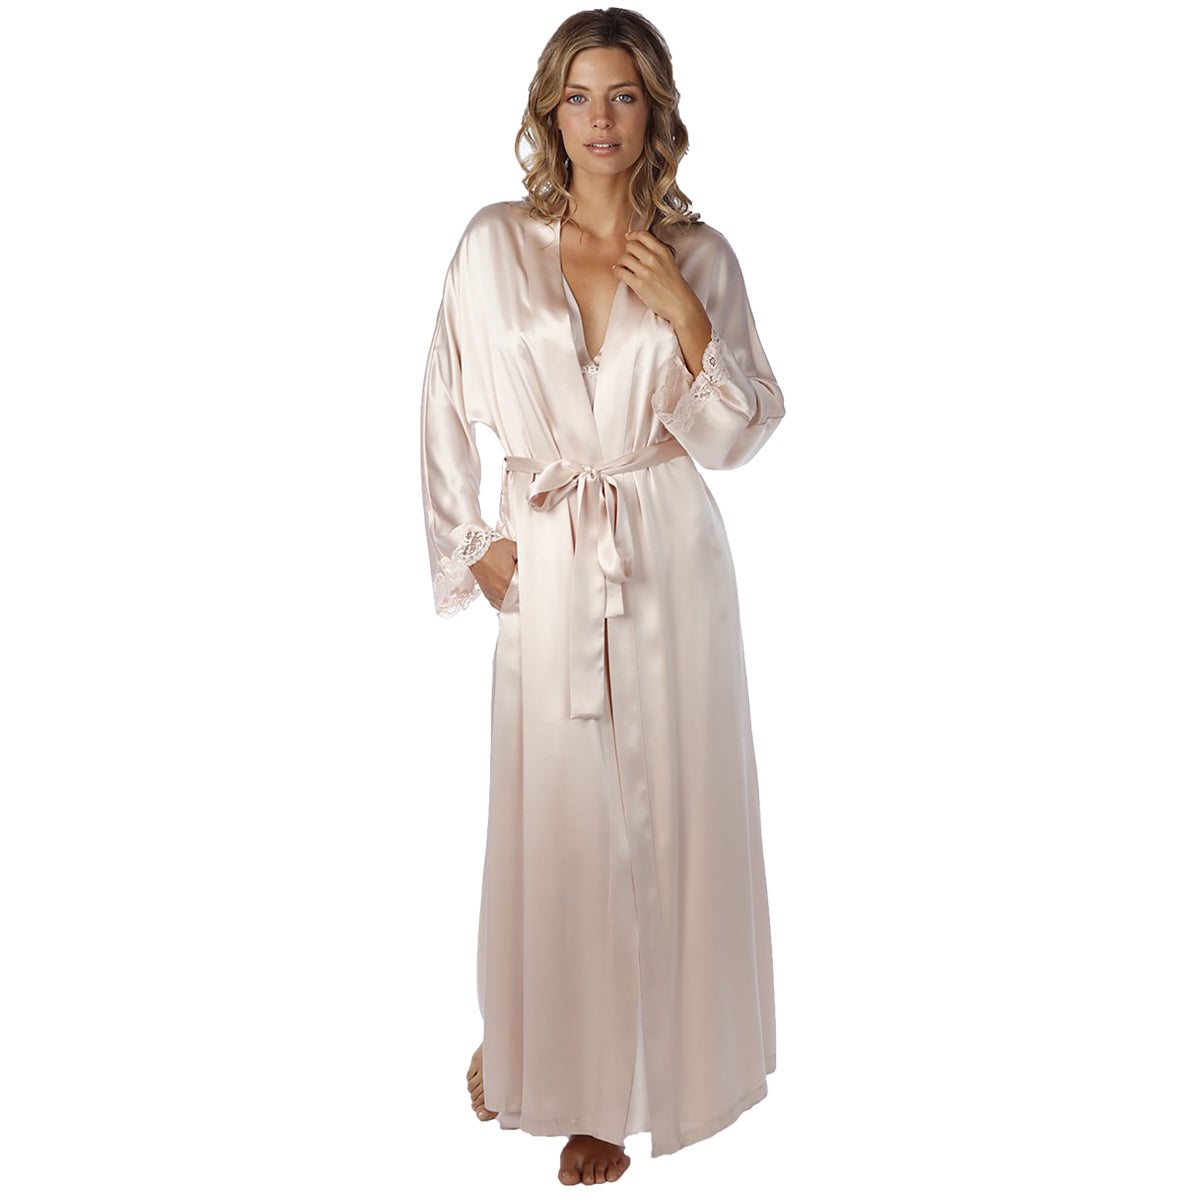 The Coco Ivory Luxury Silk Pyjamas - Classically Tailored Yet Feminine